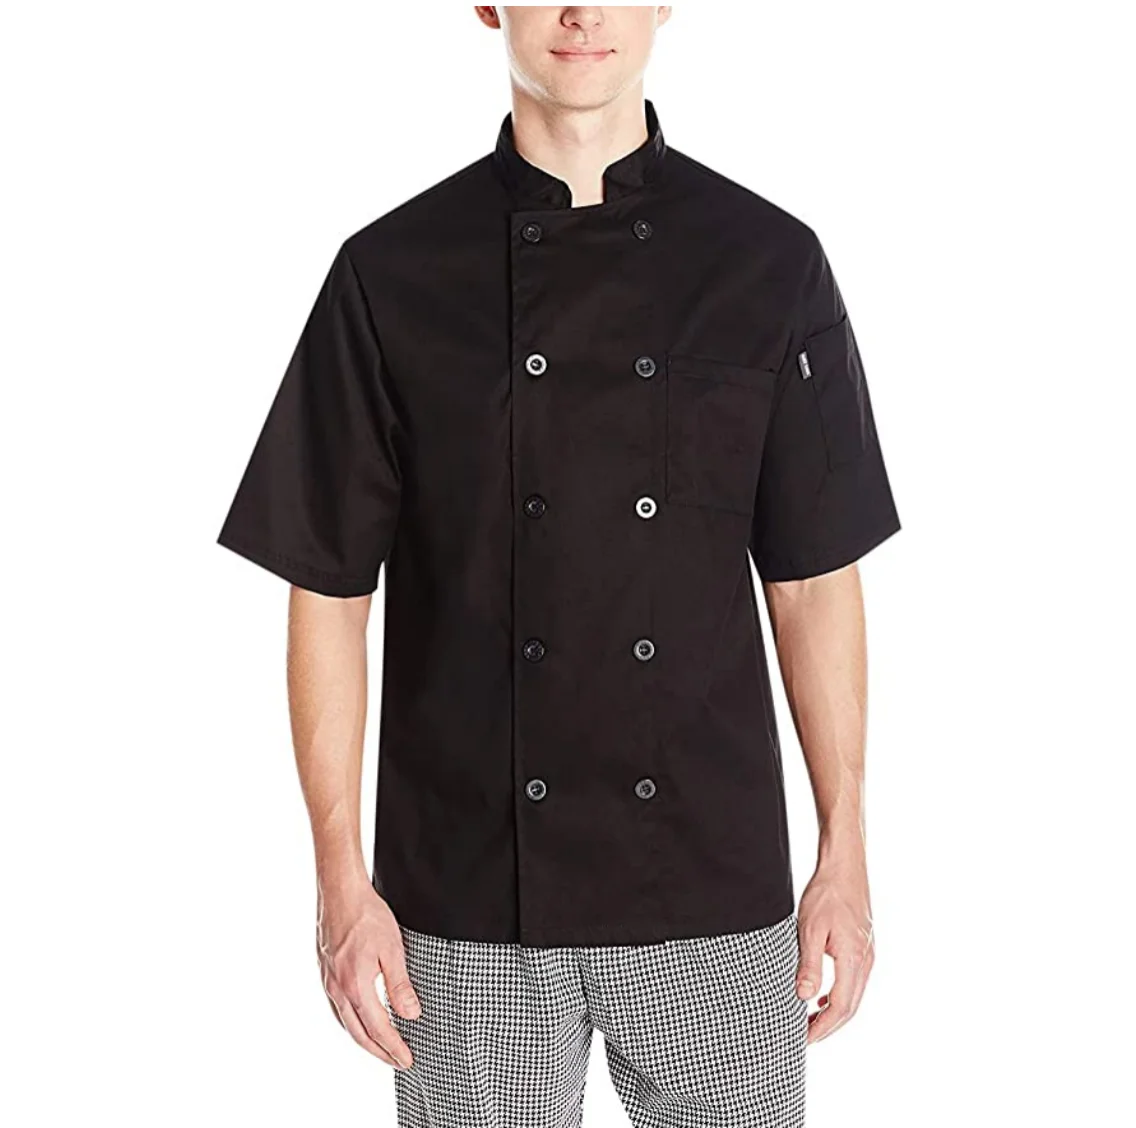 Unisex black white new design hotel kitchen staff short sleeve chef coat jacket uniform sets men women (1600691133650)